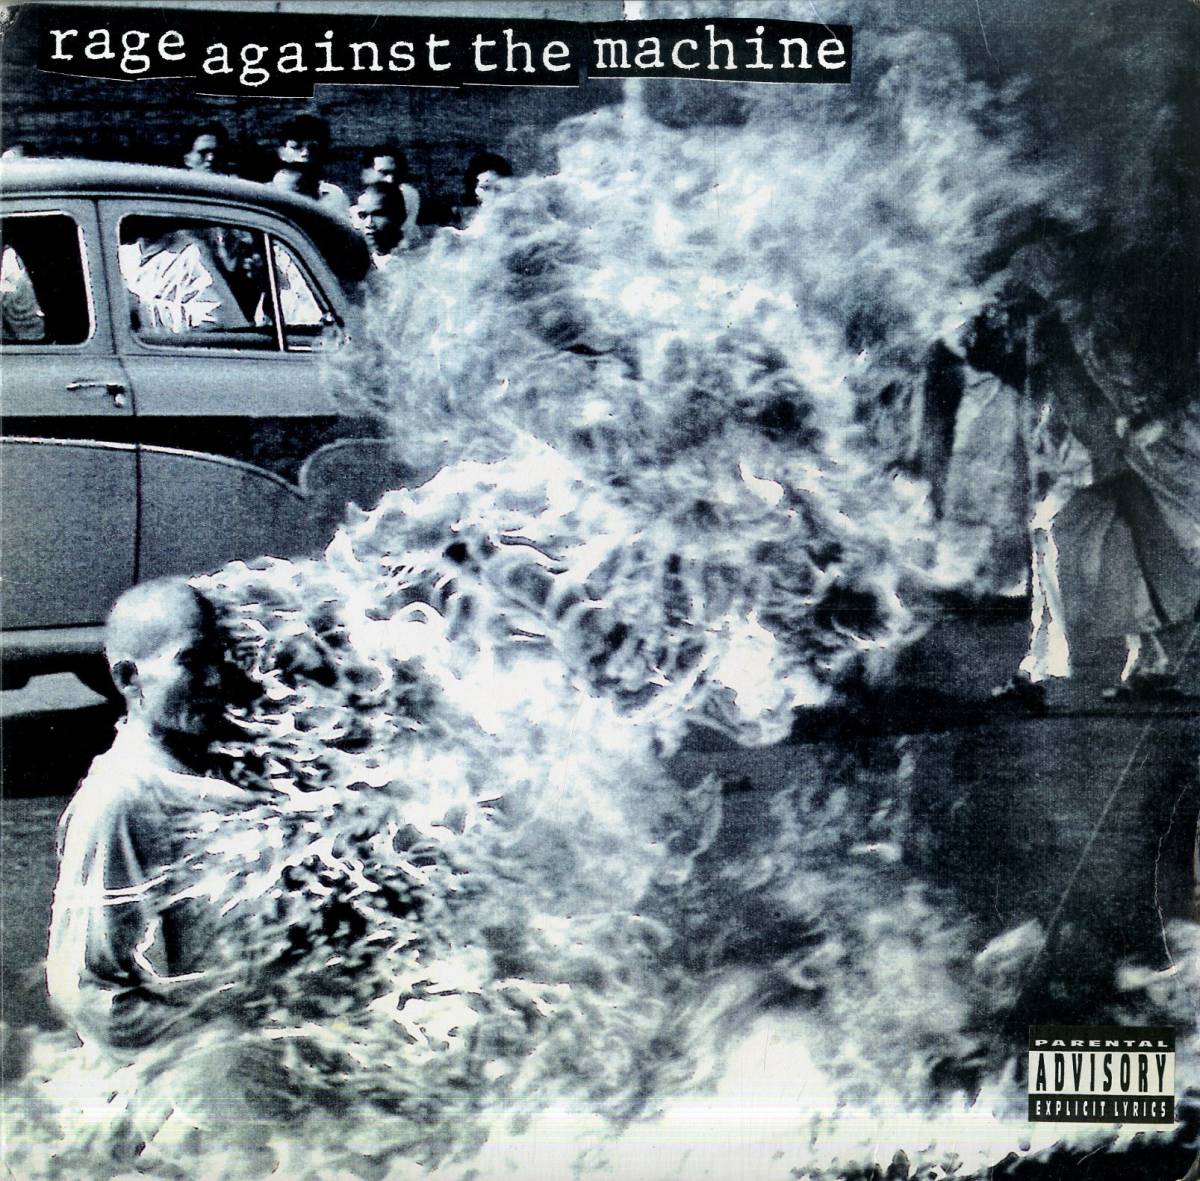 Yahoo!オークション -「rage against the machine レコード」の落札 